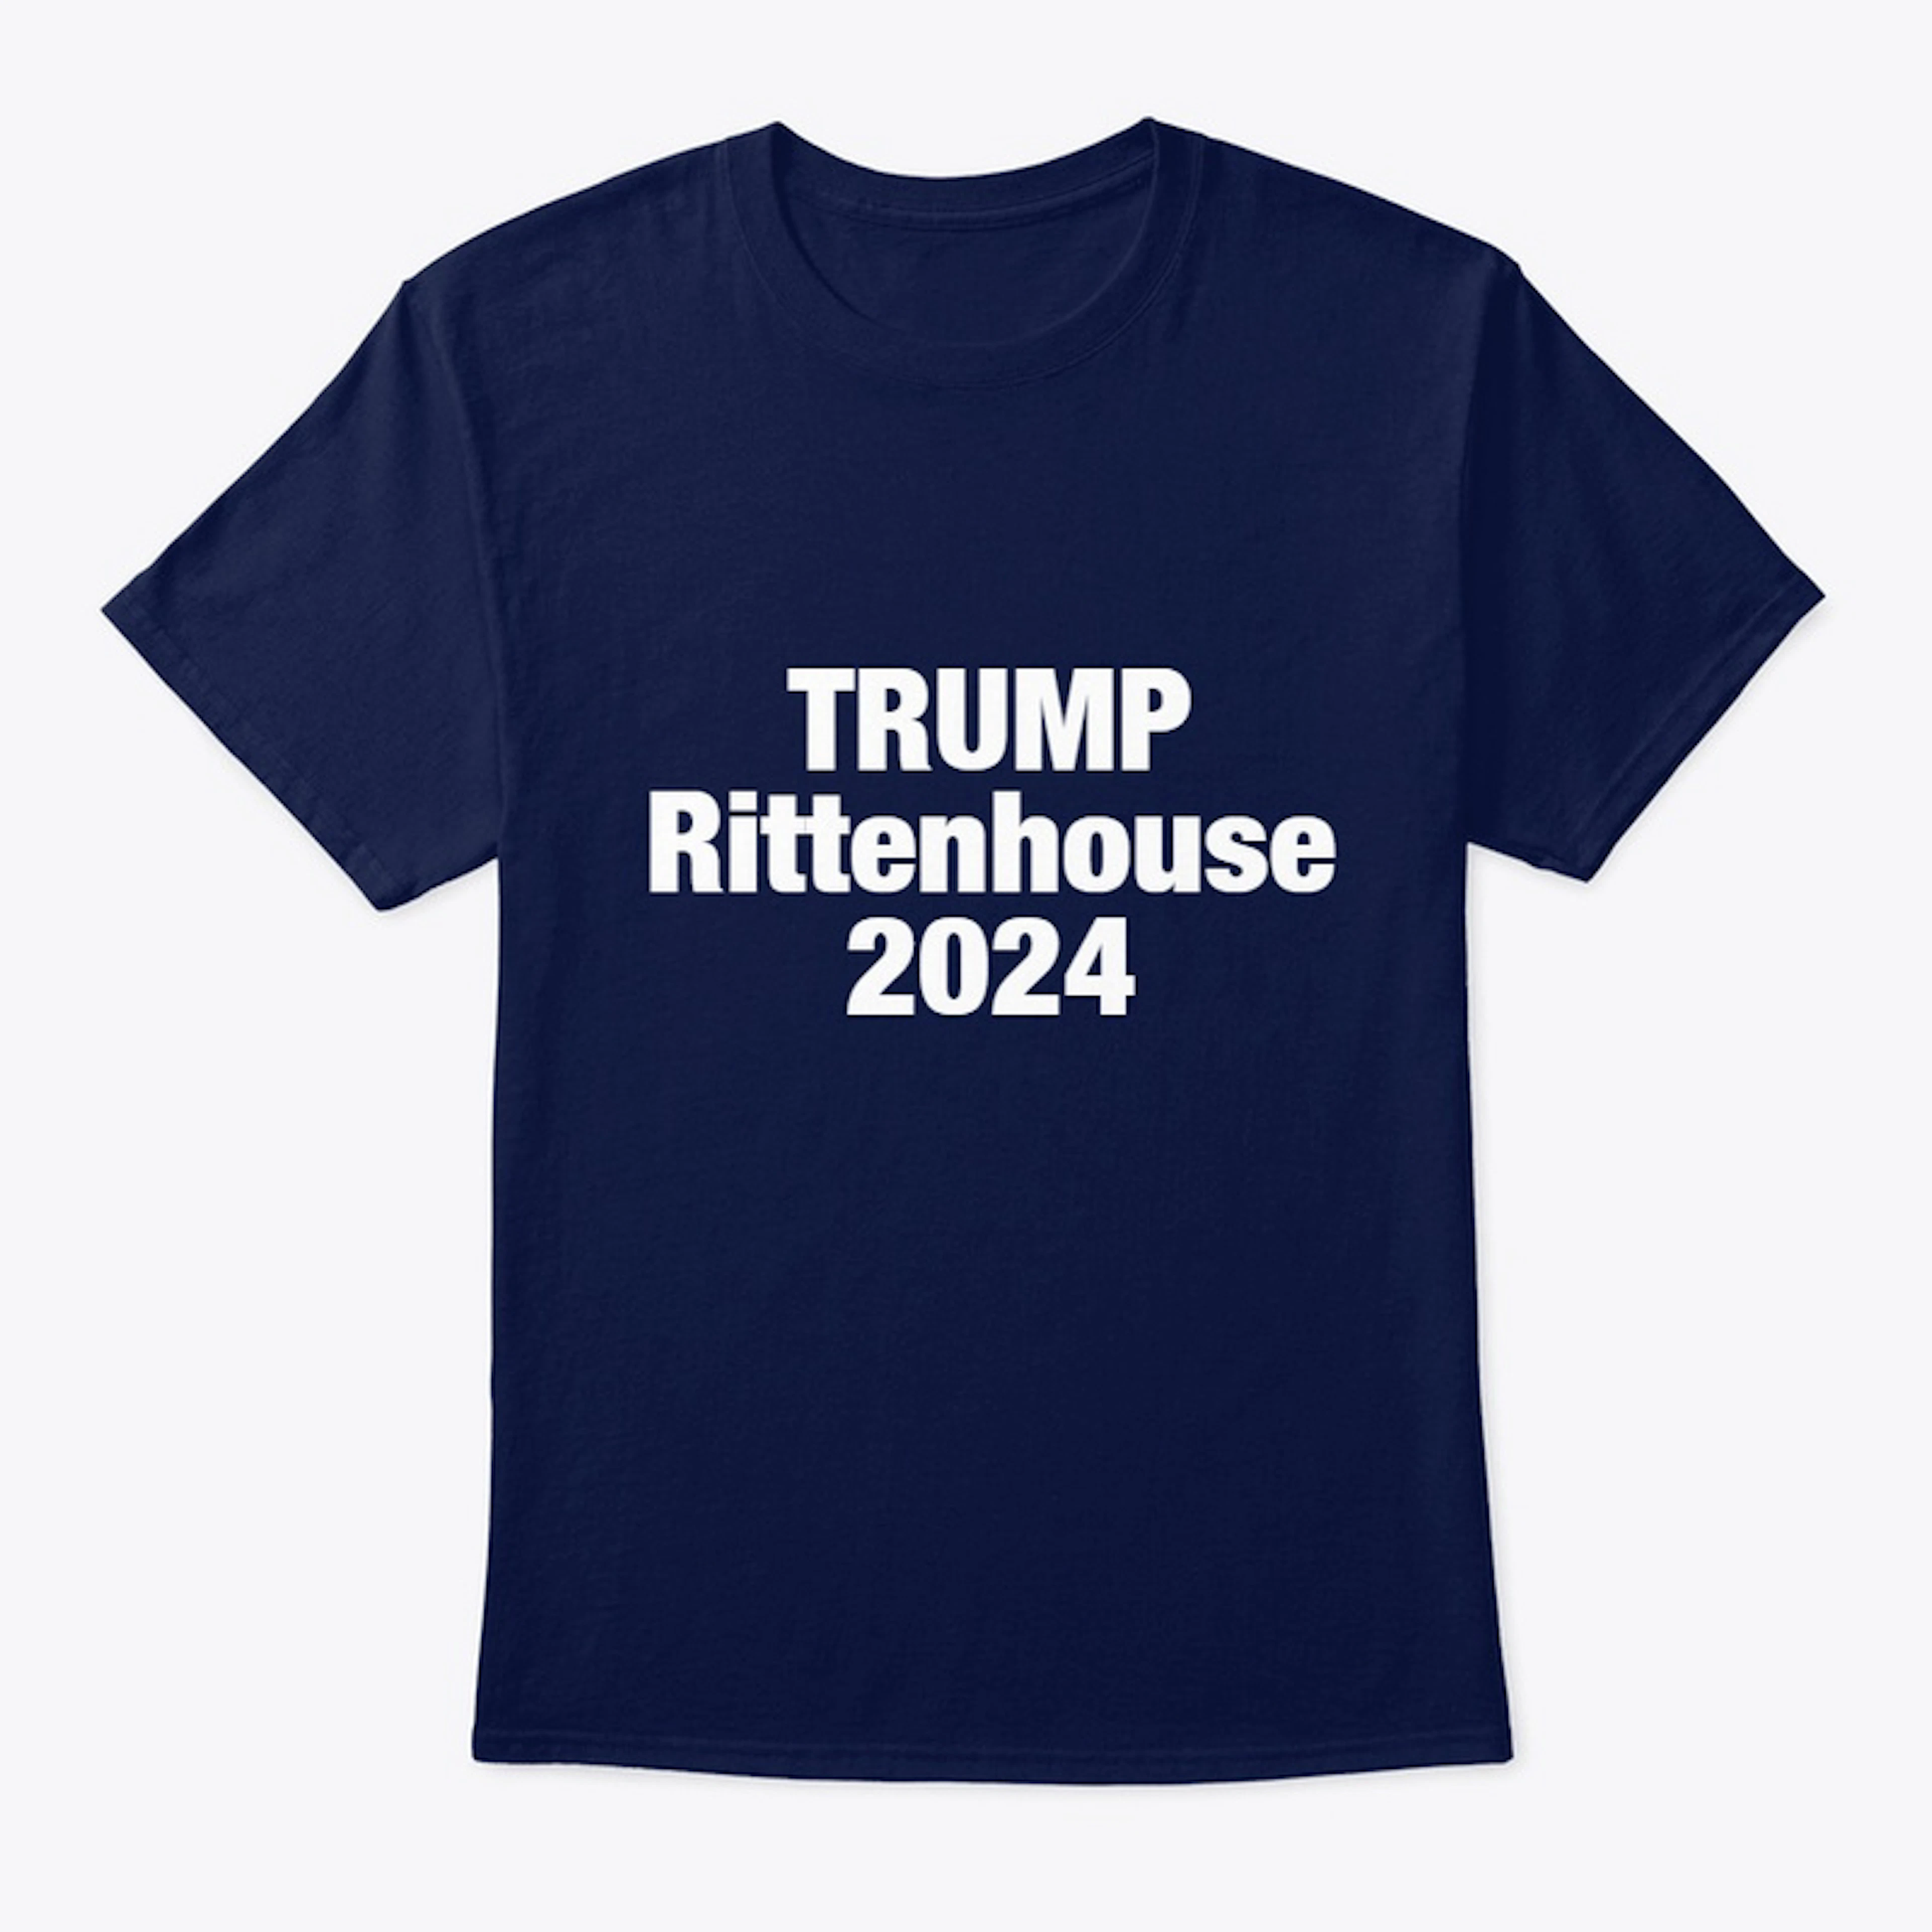 Trump Rittenhouse